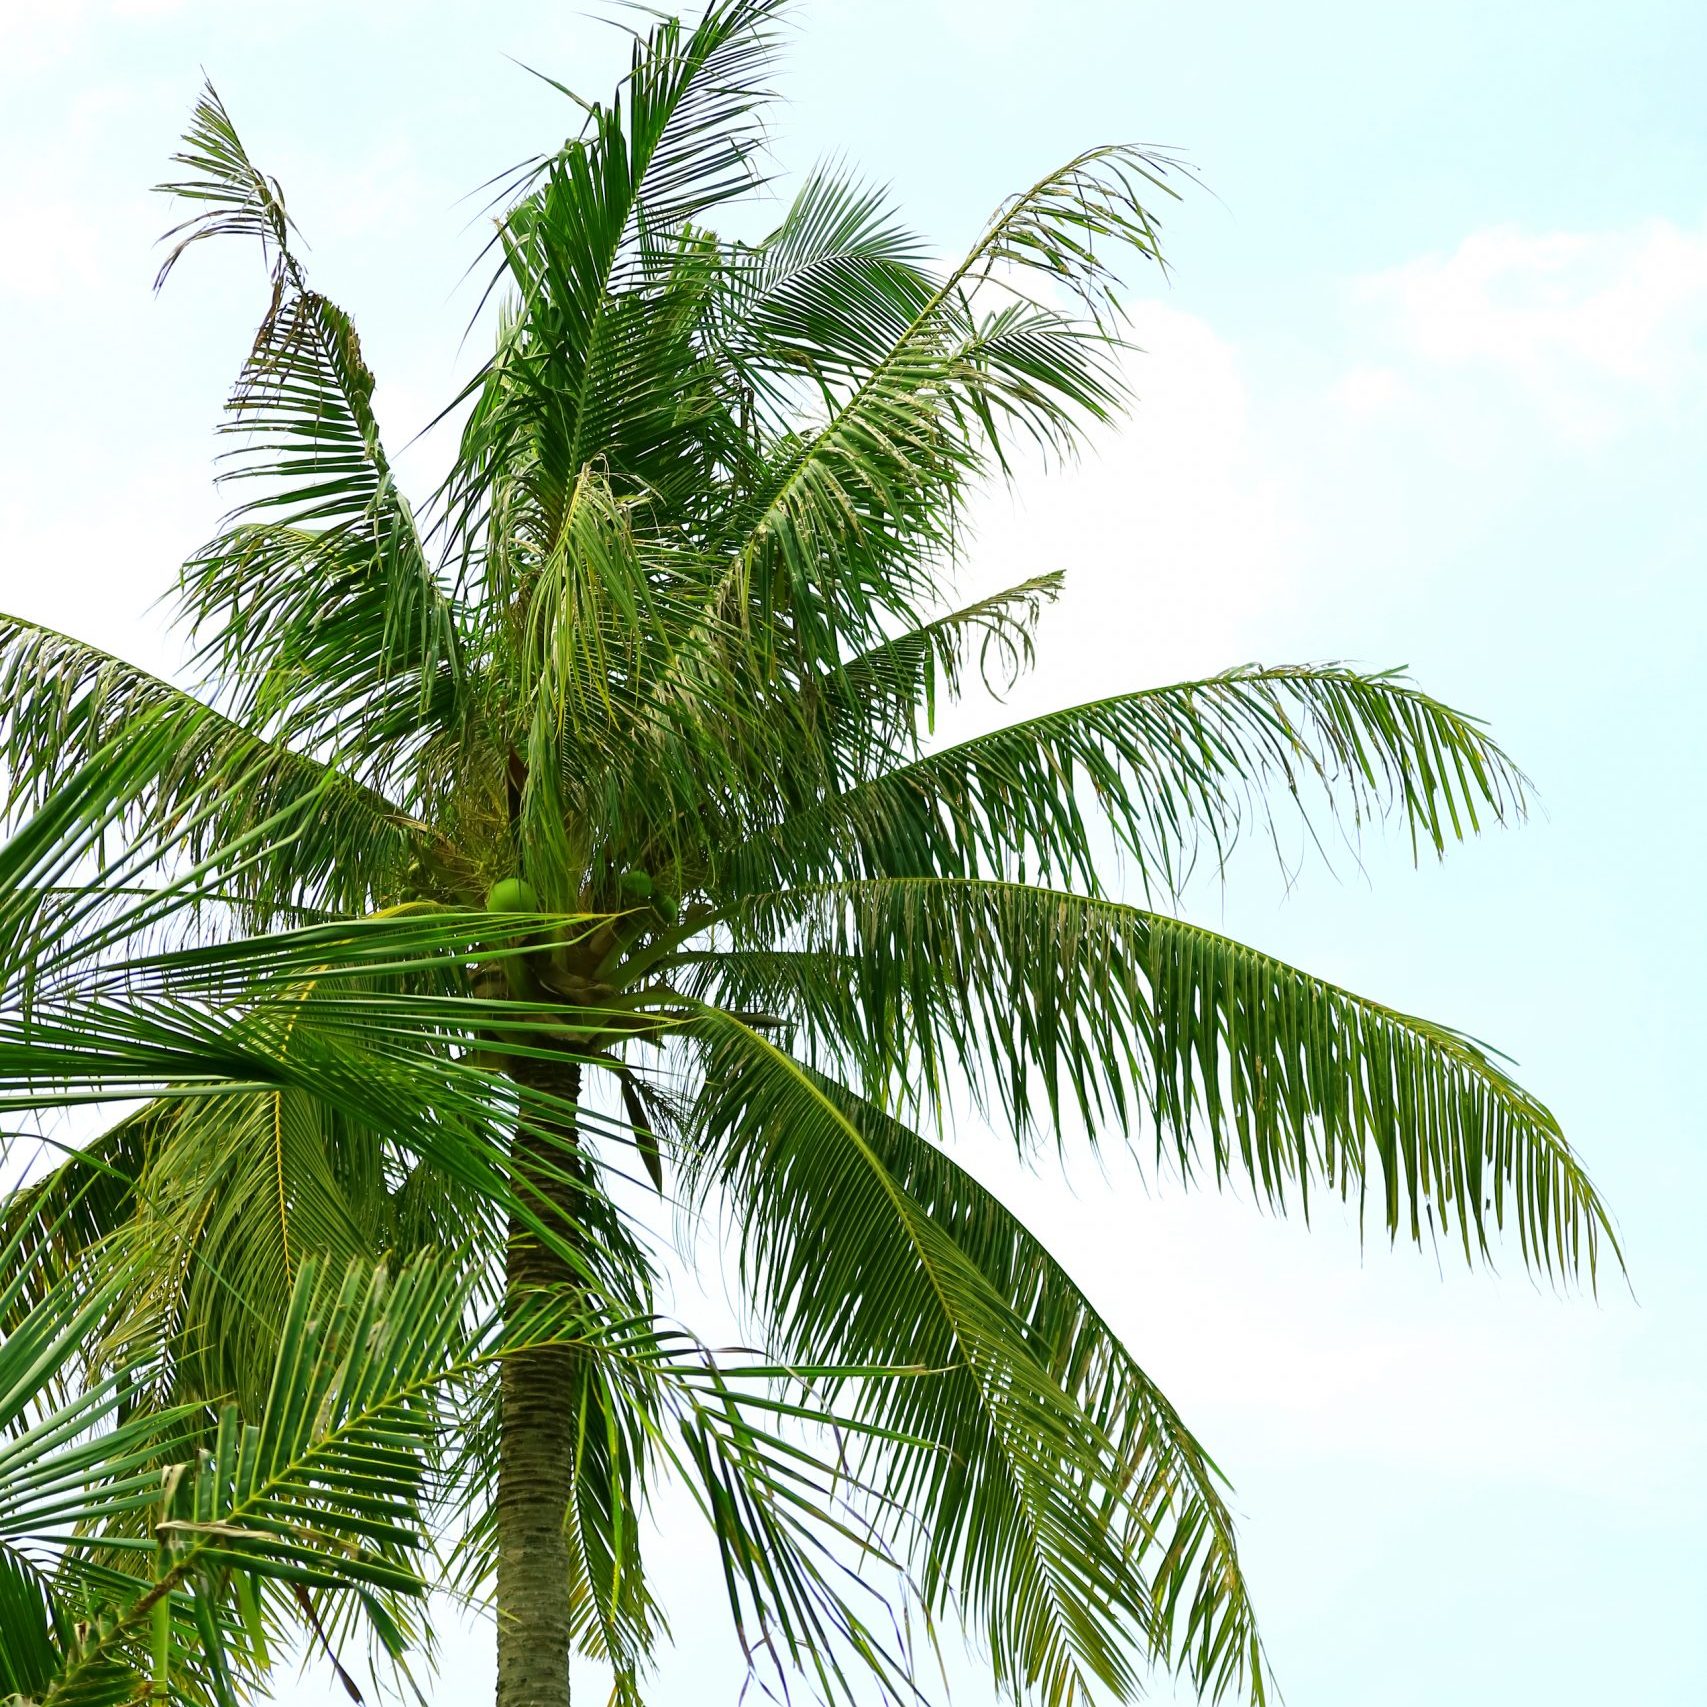 Tall Coconut Palm Tree against Blue Sky